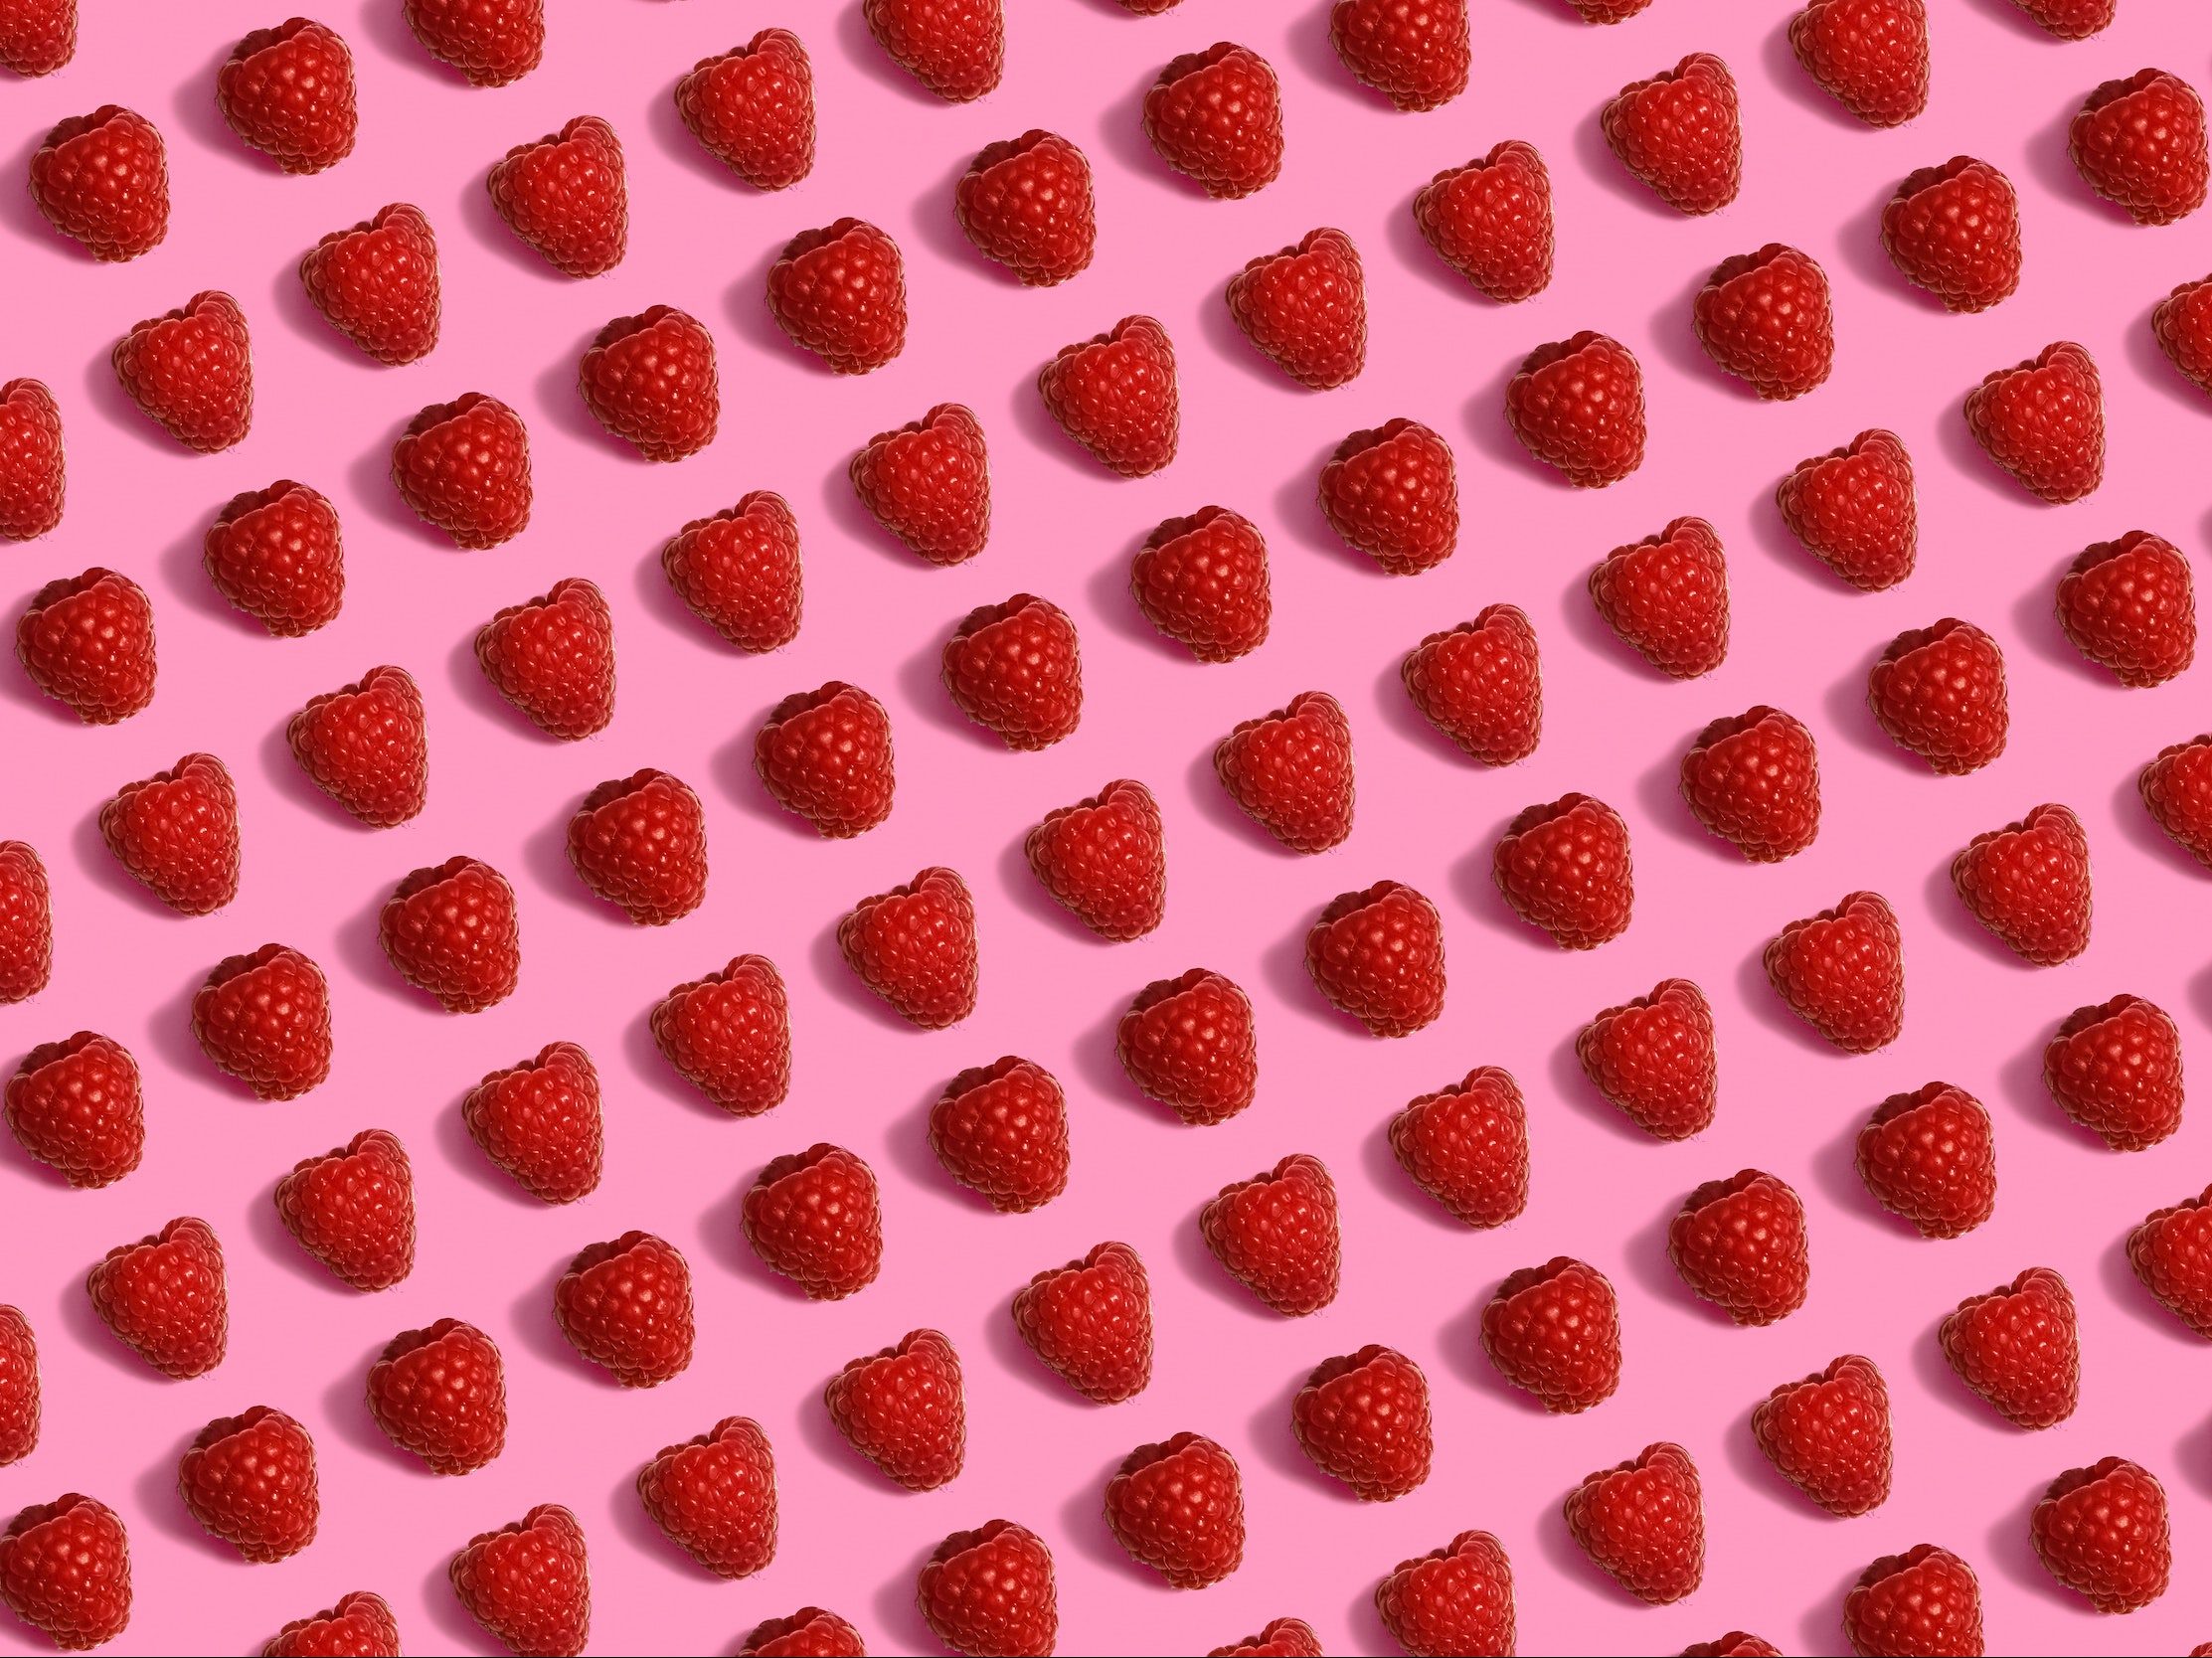 Raspberries on pink background